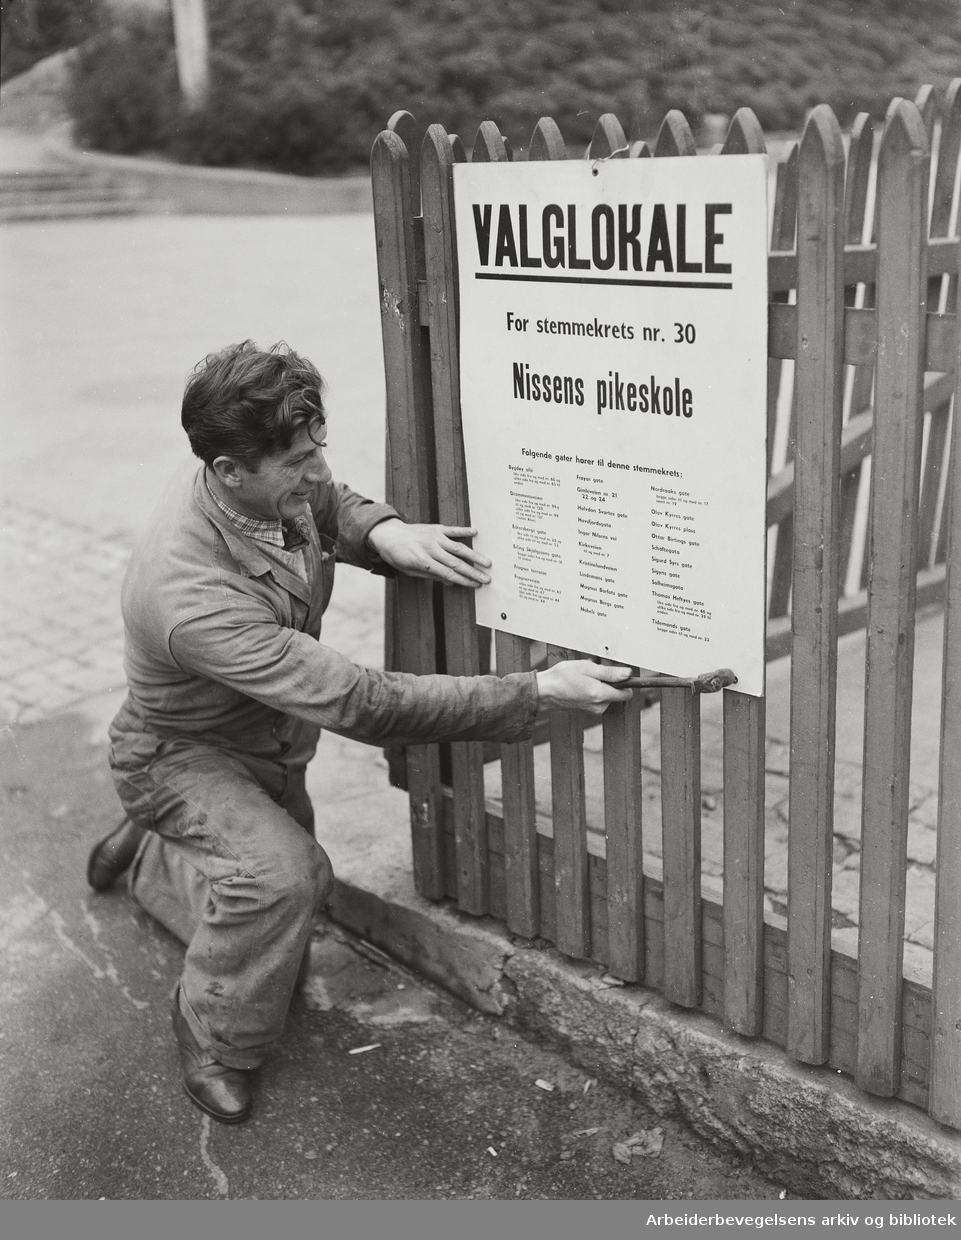 Stortingsvalget 1949. Valglokale på Nissens pikeskole. 10 oktober